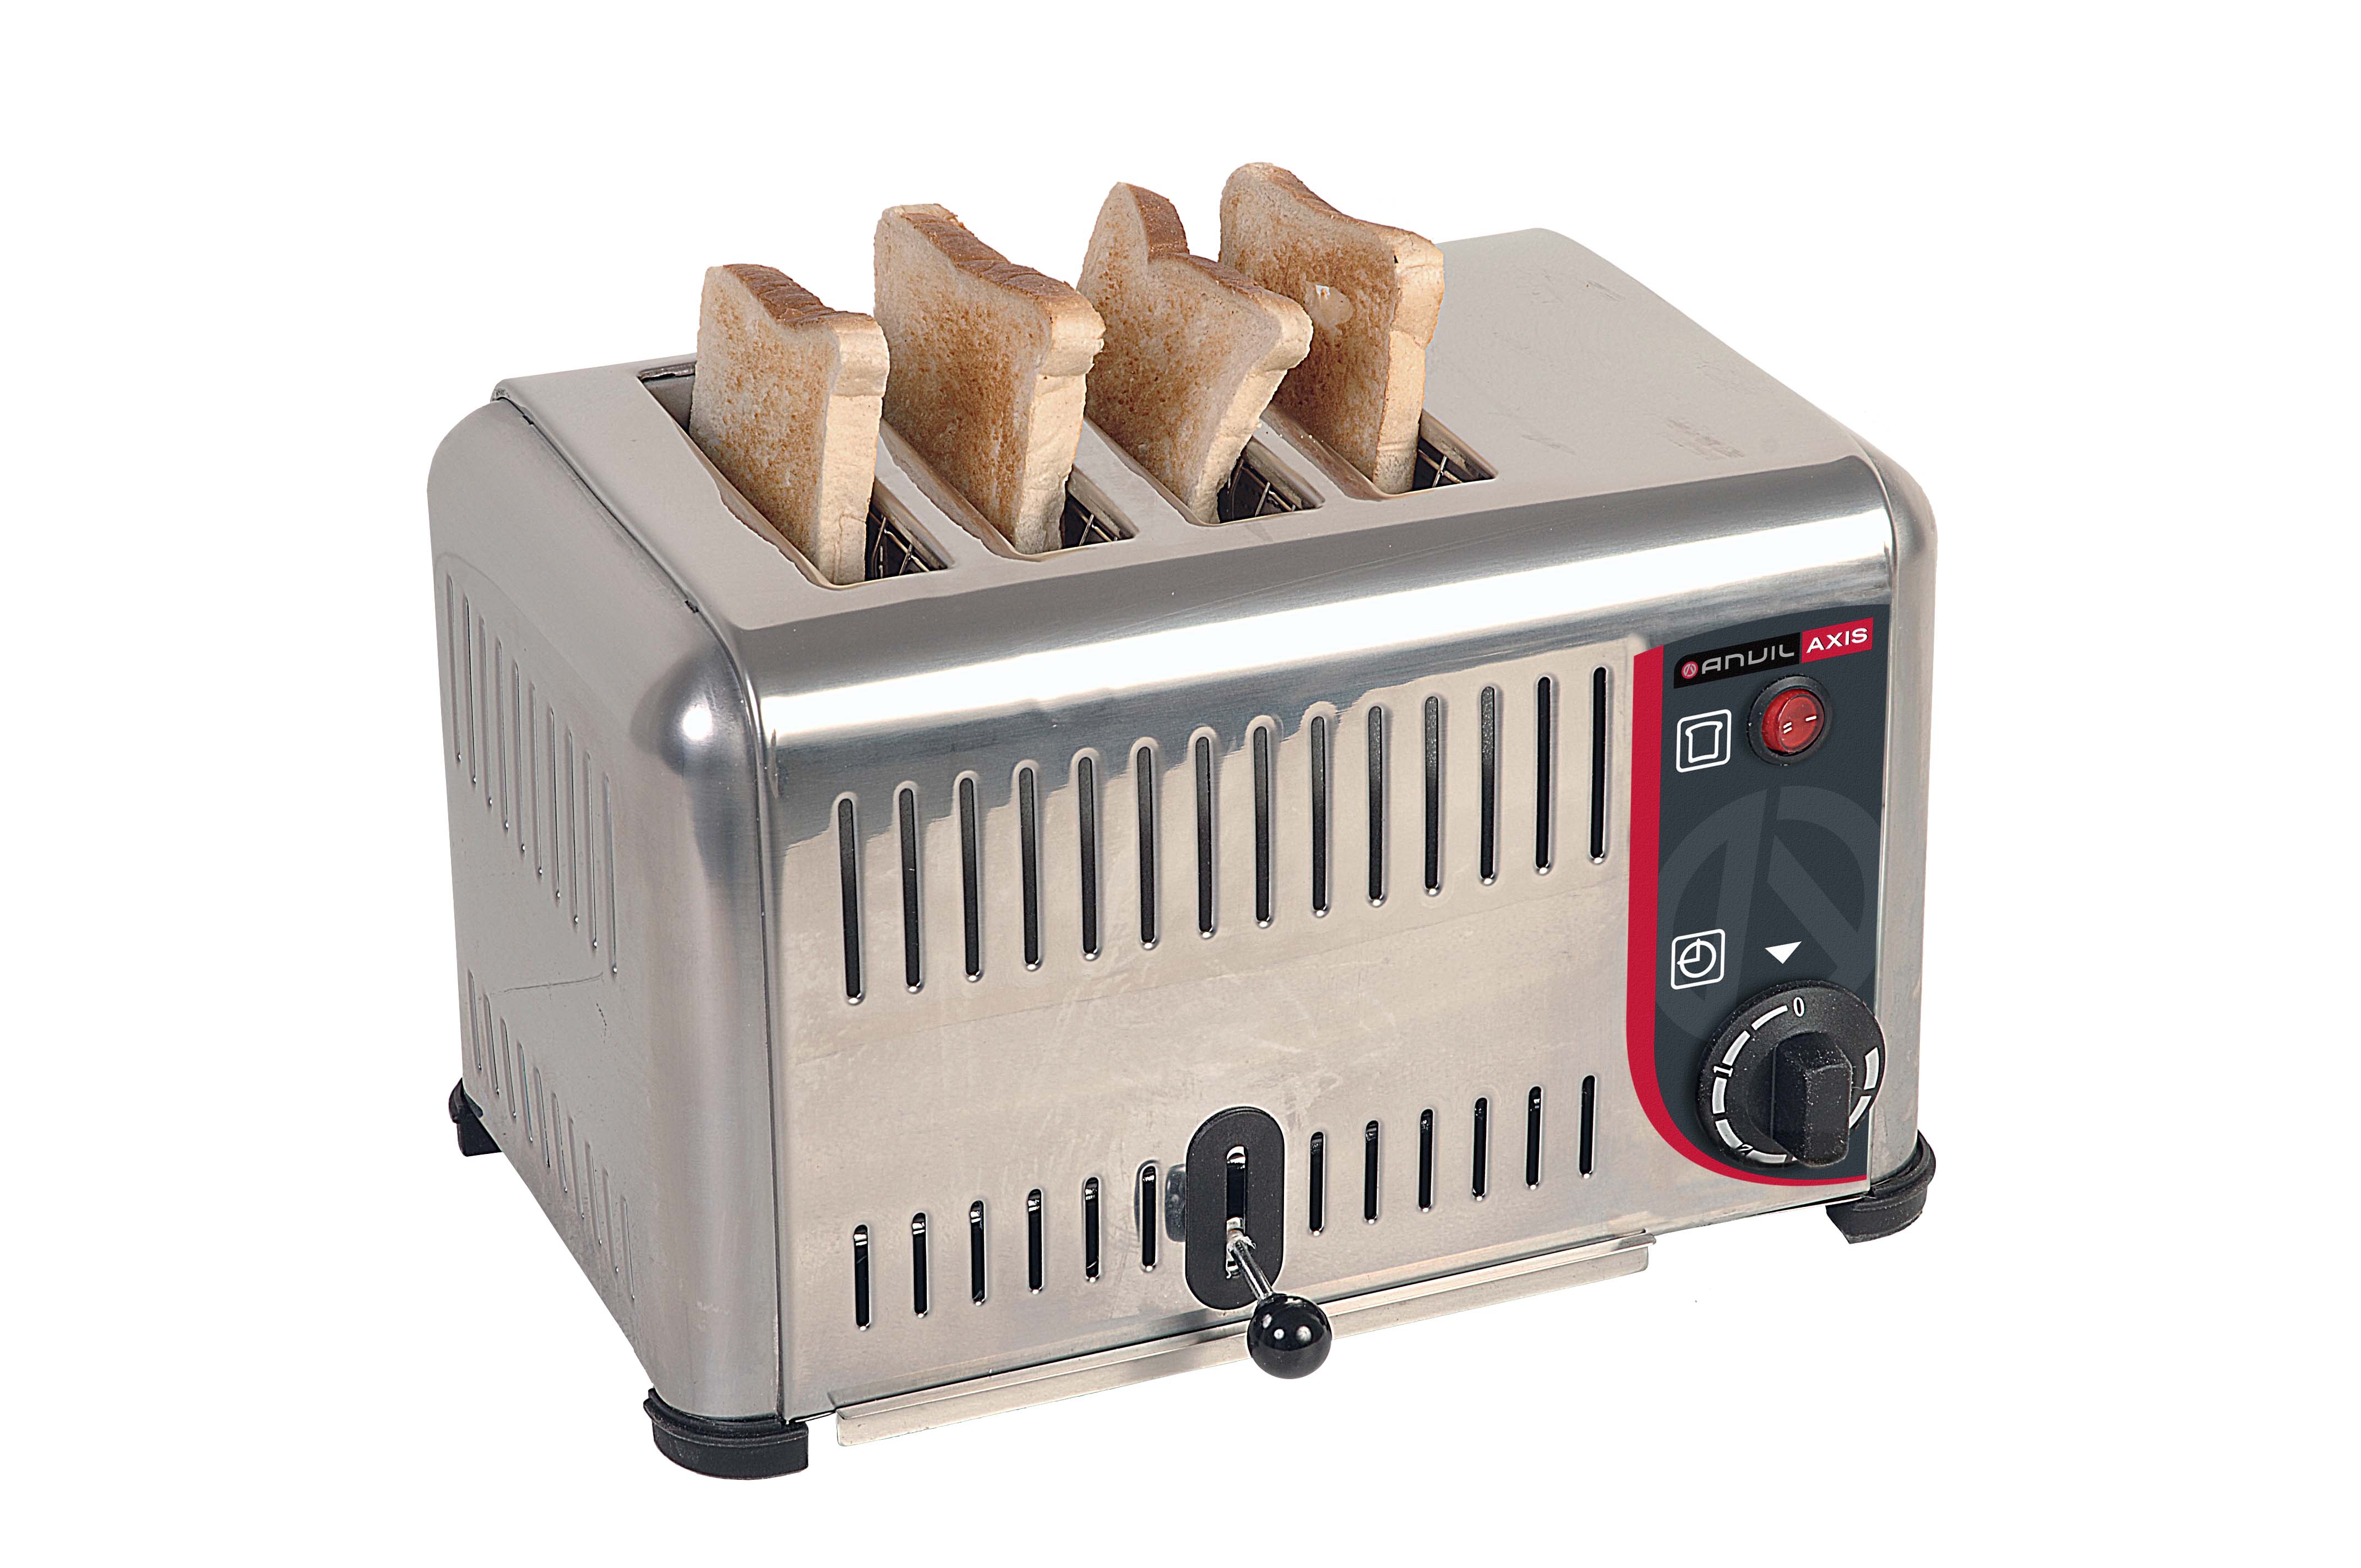 tsk0004--toaster-anvil-manual-lift--4-slice